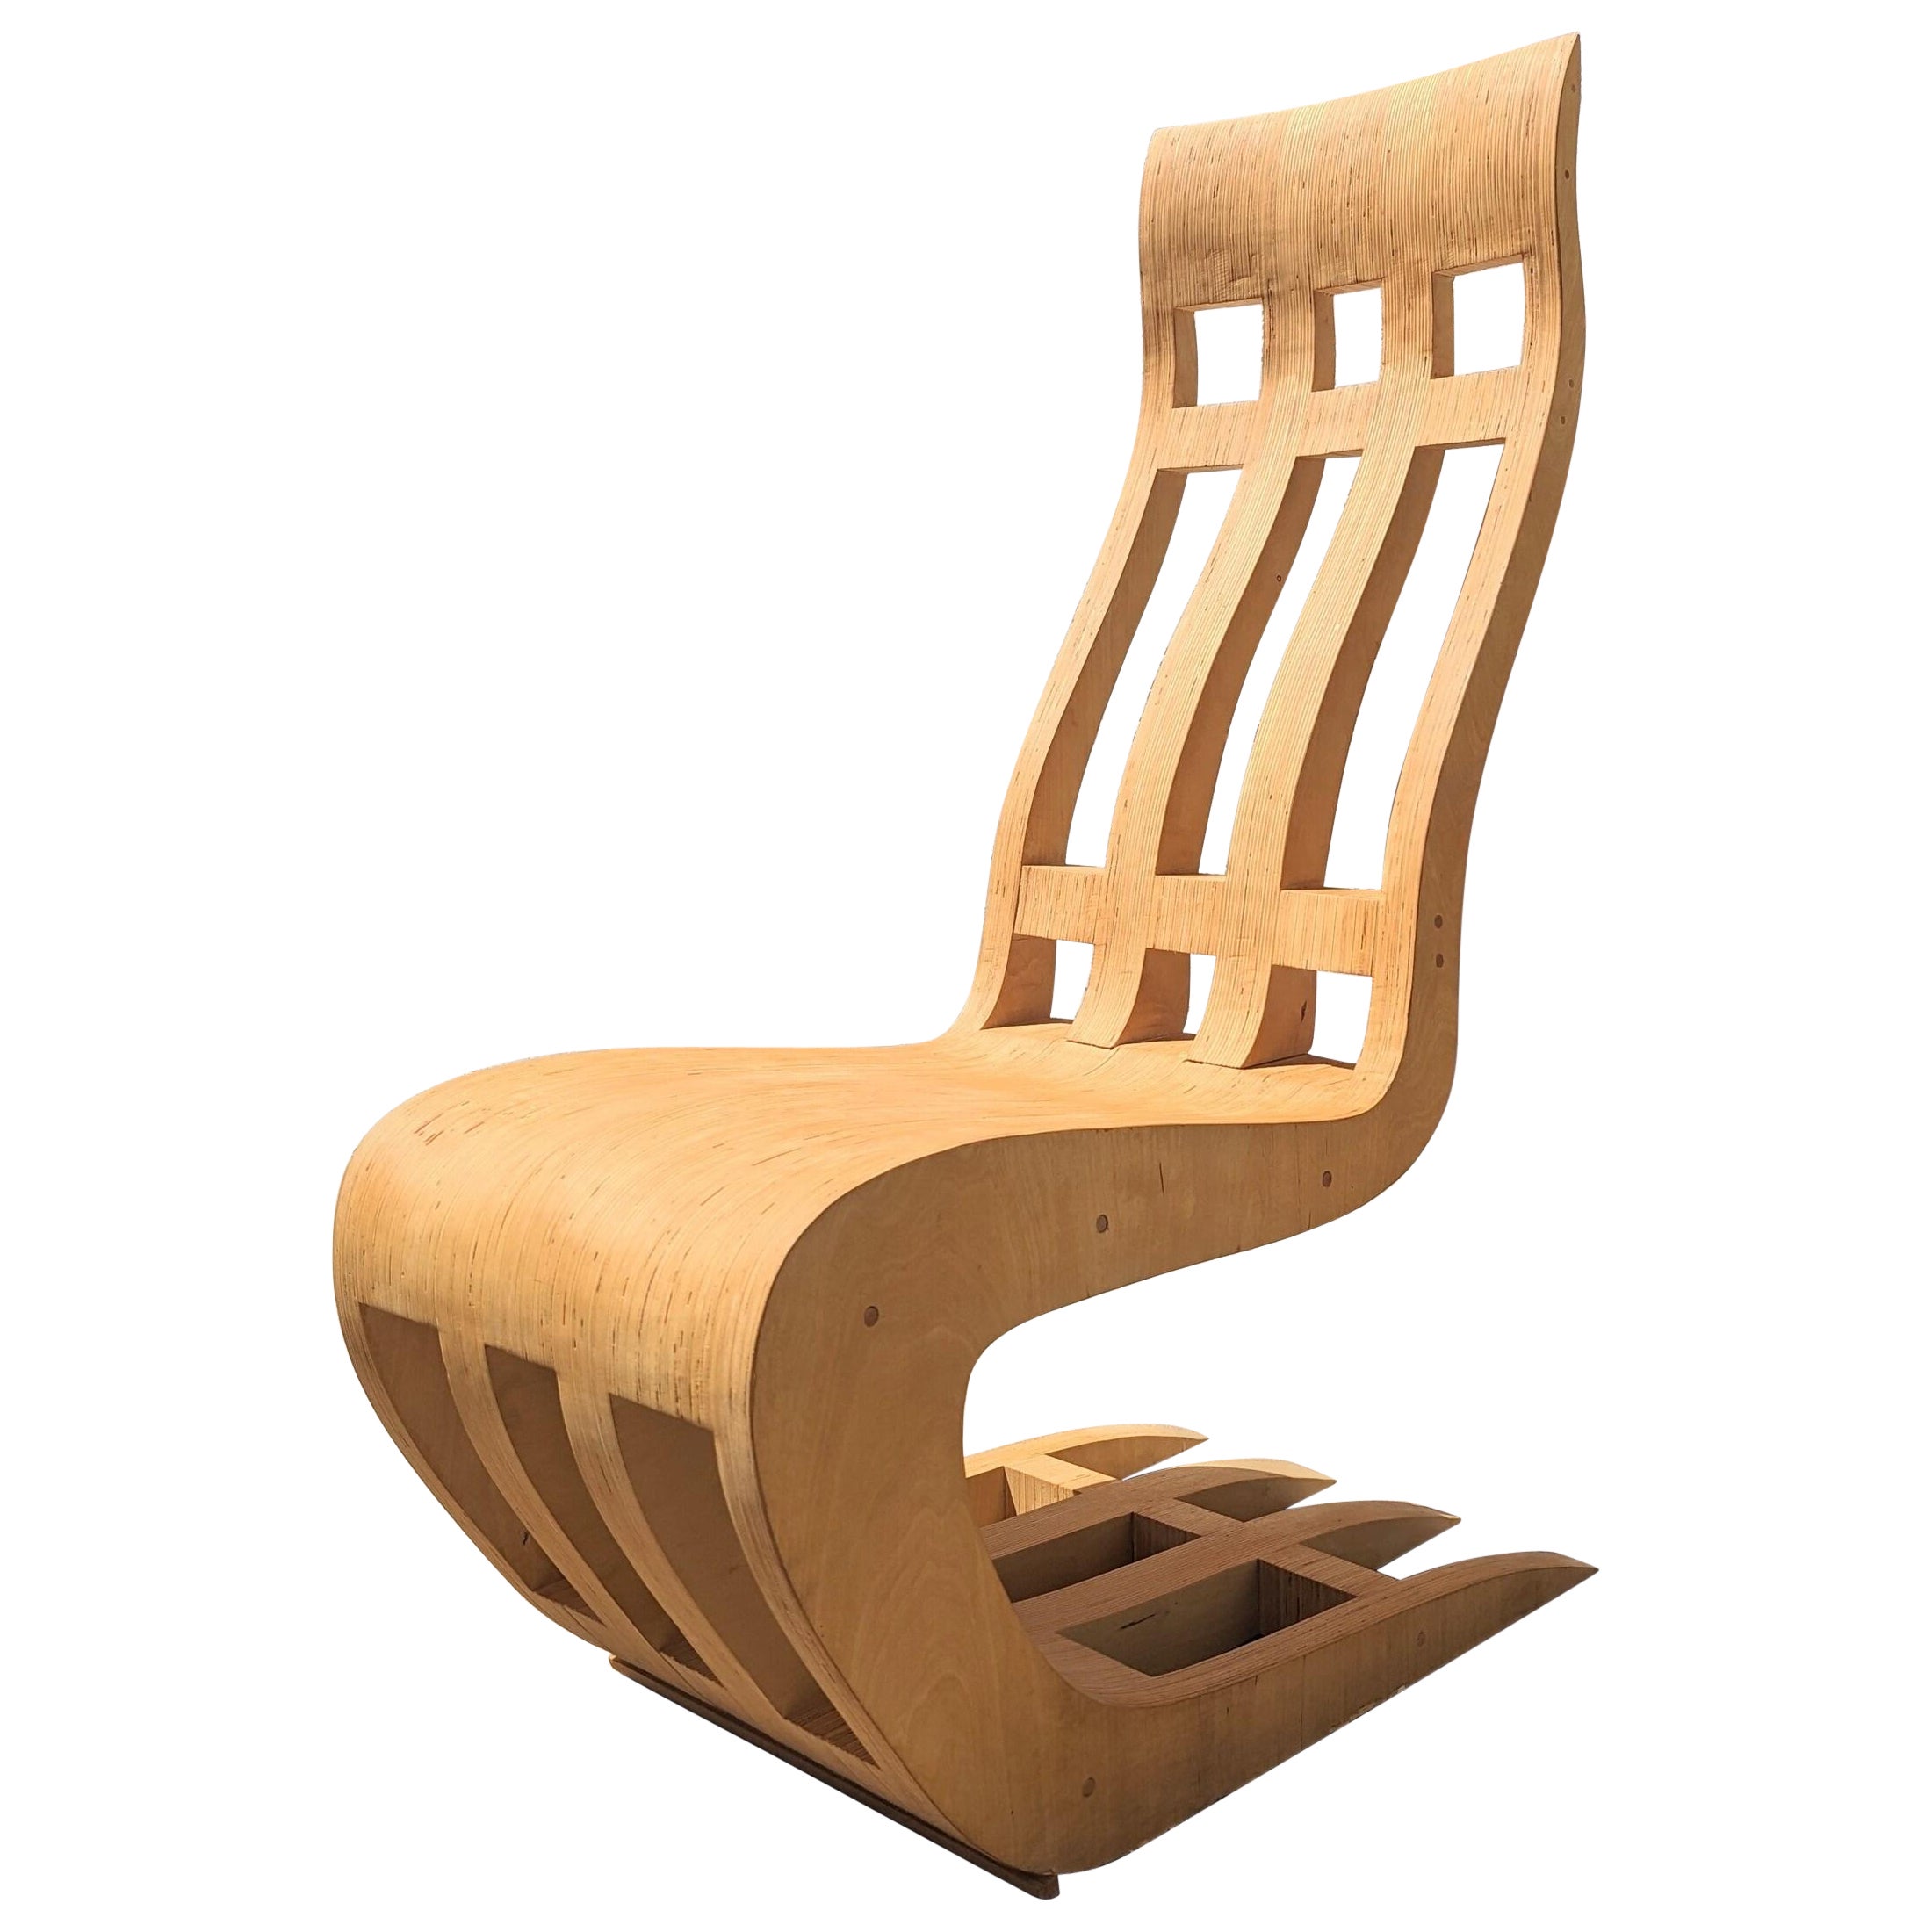 Chaise en bois courbé de style The Modernity, construite sur mesure en vente